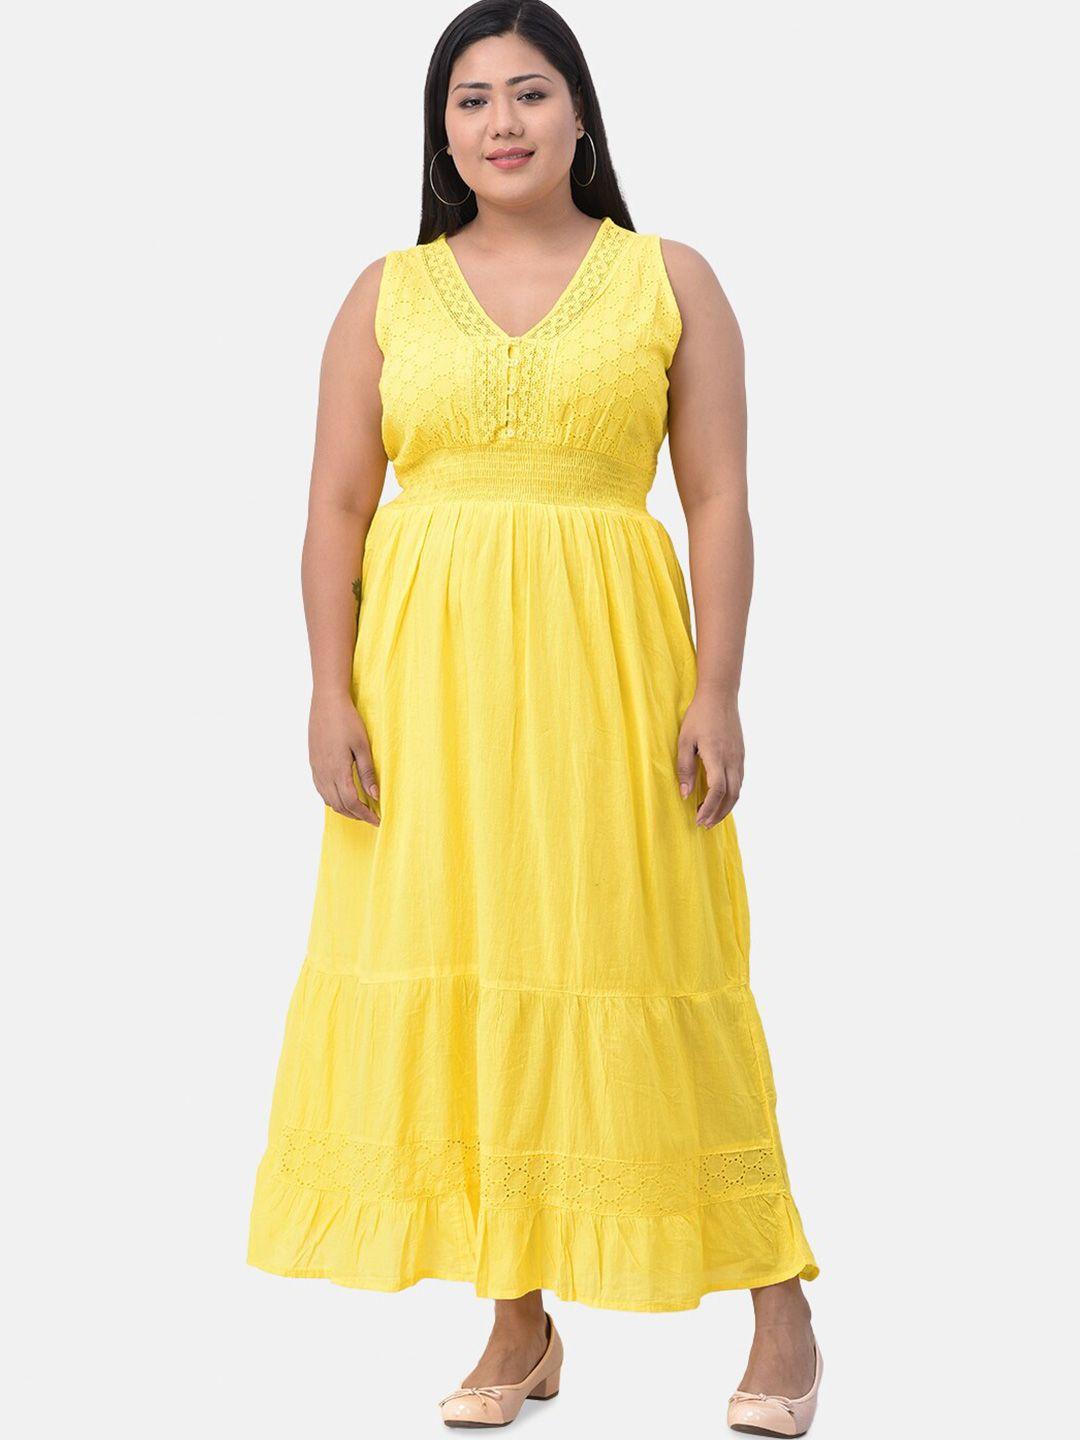 veldress women yellow embroidered maxi dress plus size